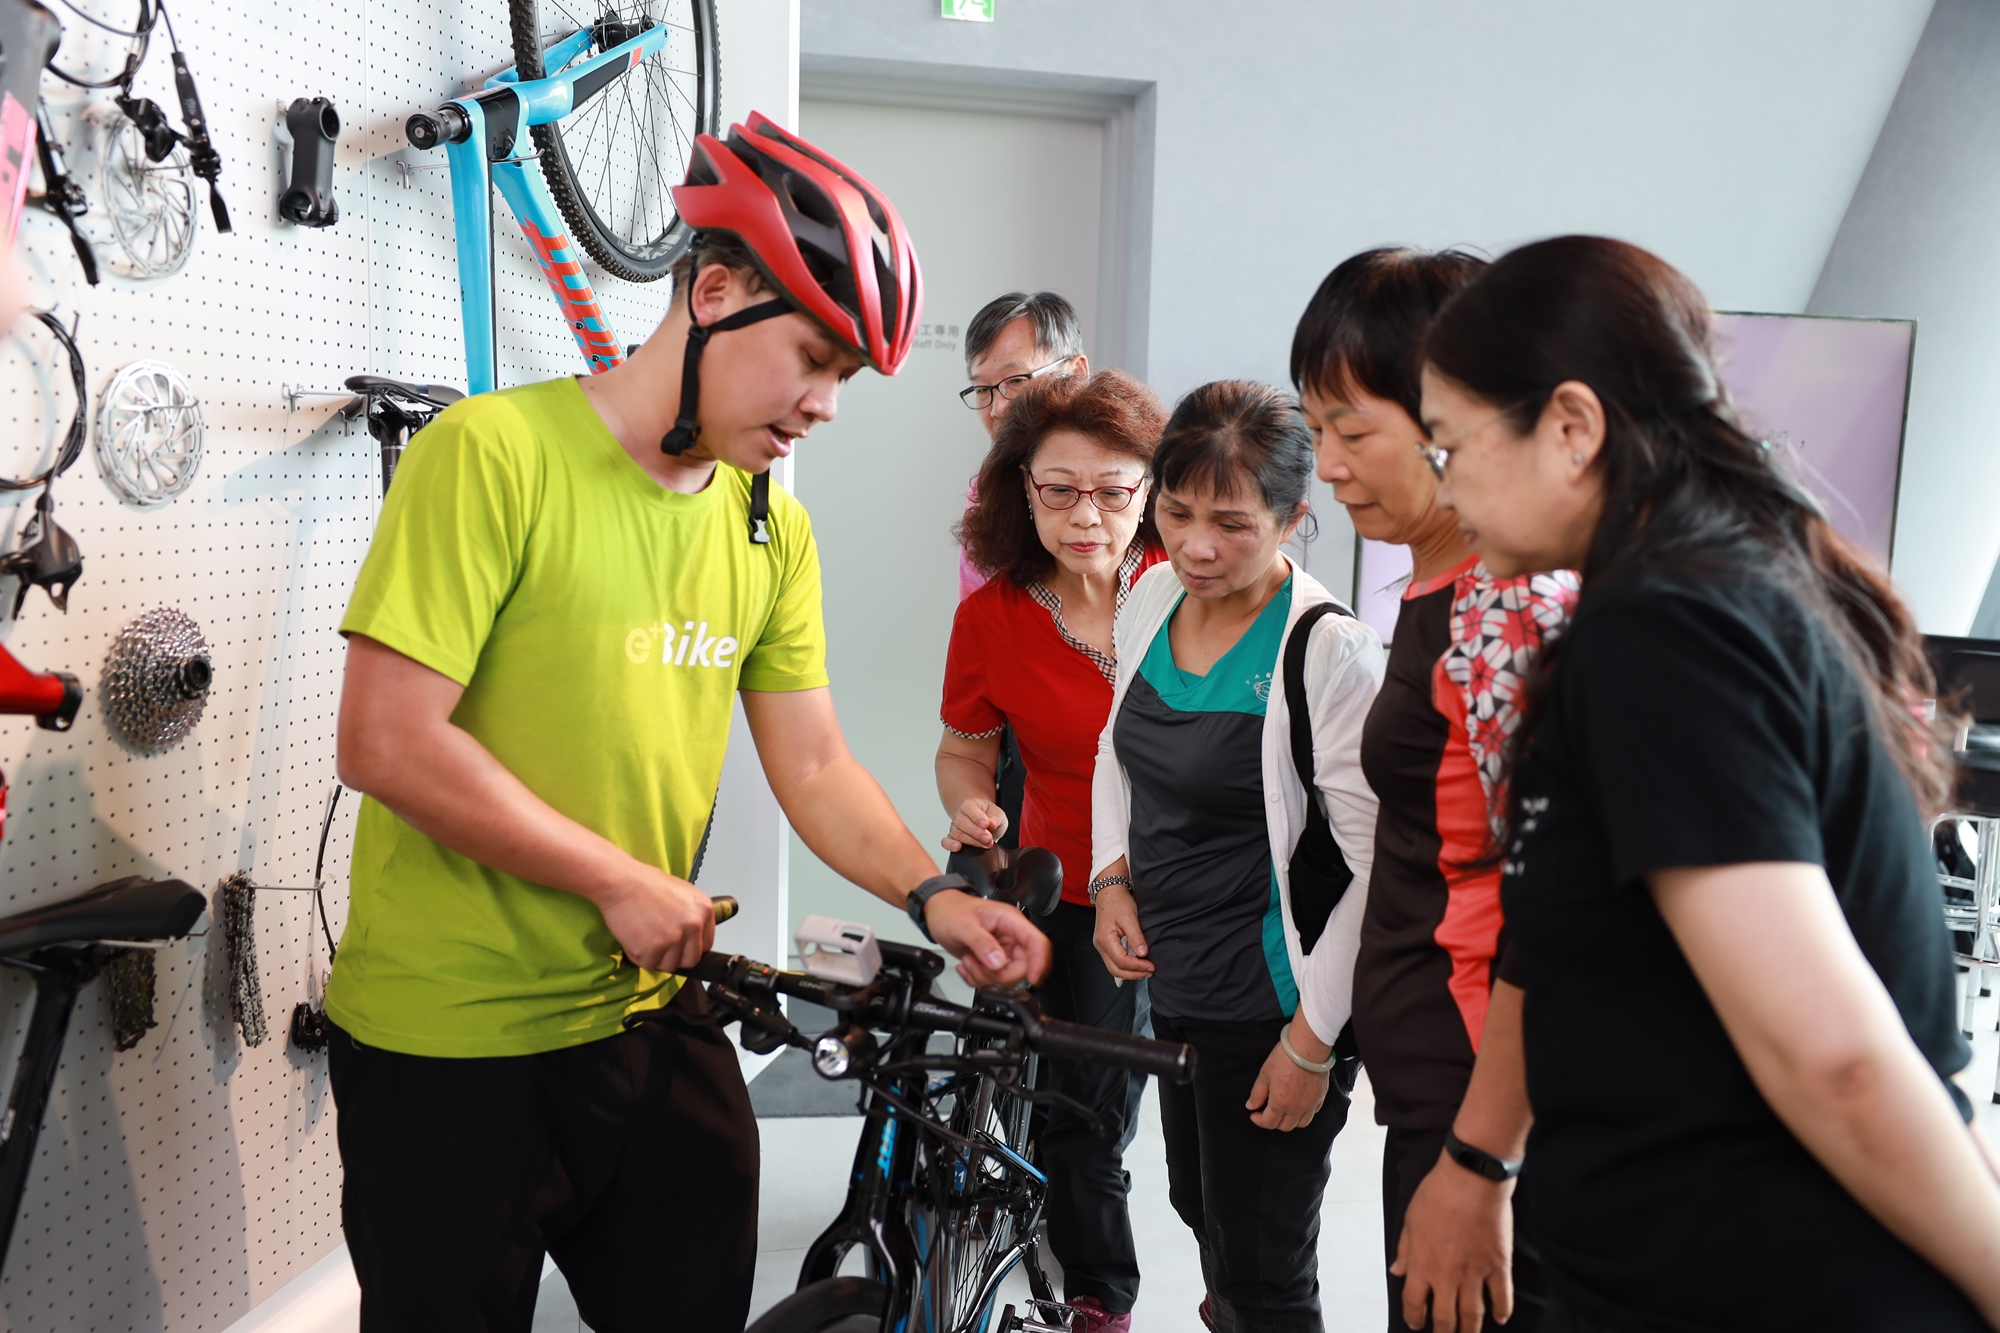 E-Bike騎乘技巧體驗教學課程